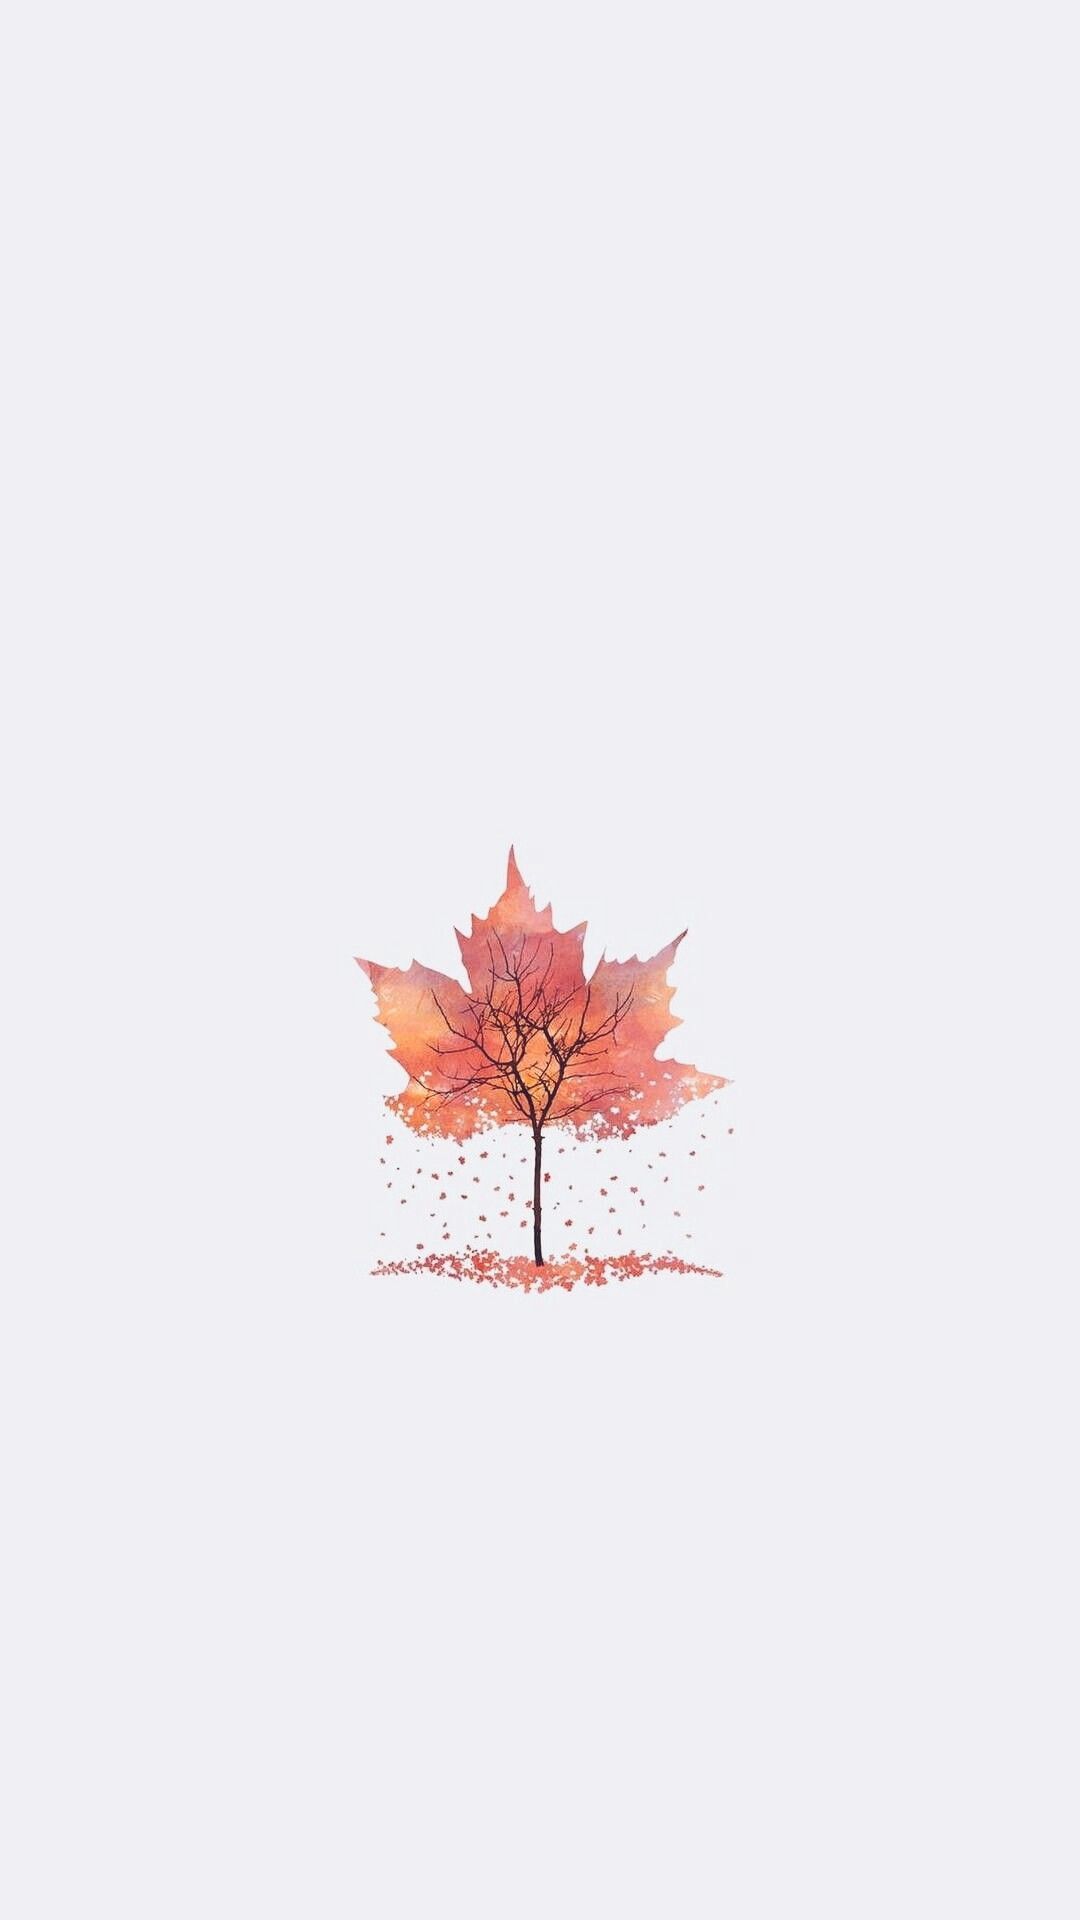 White fall leaf background phone autumn iPhone wallpaper lock screen. Free fall wallpaper, Fall wallpaper, Autumn leaves wallpaper